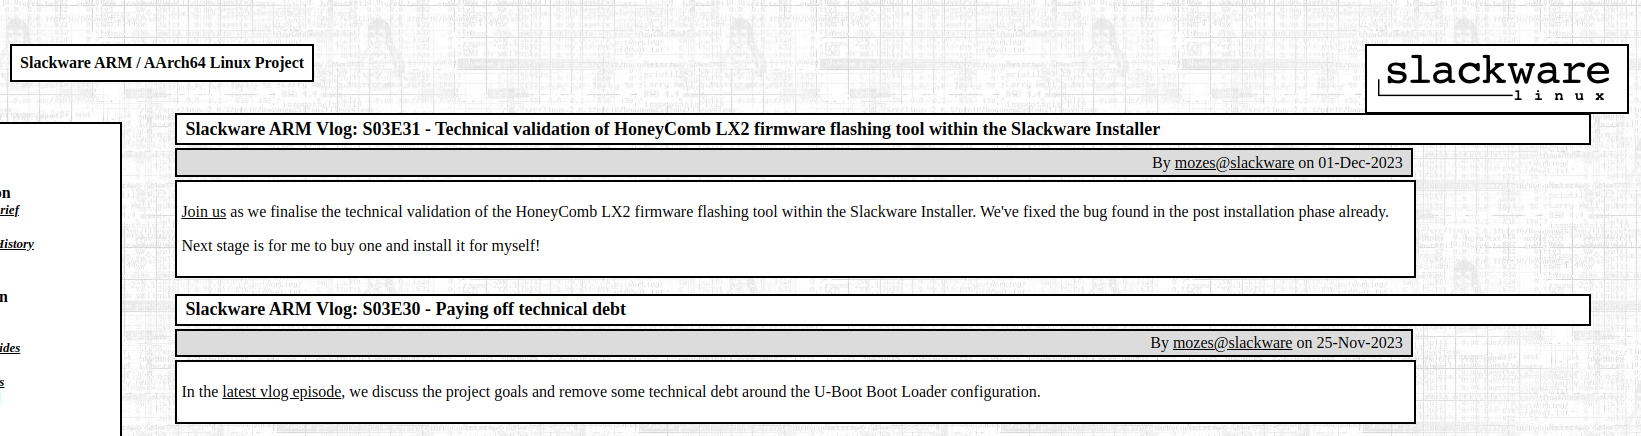 a screenshot of the slackware arm homepage